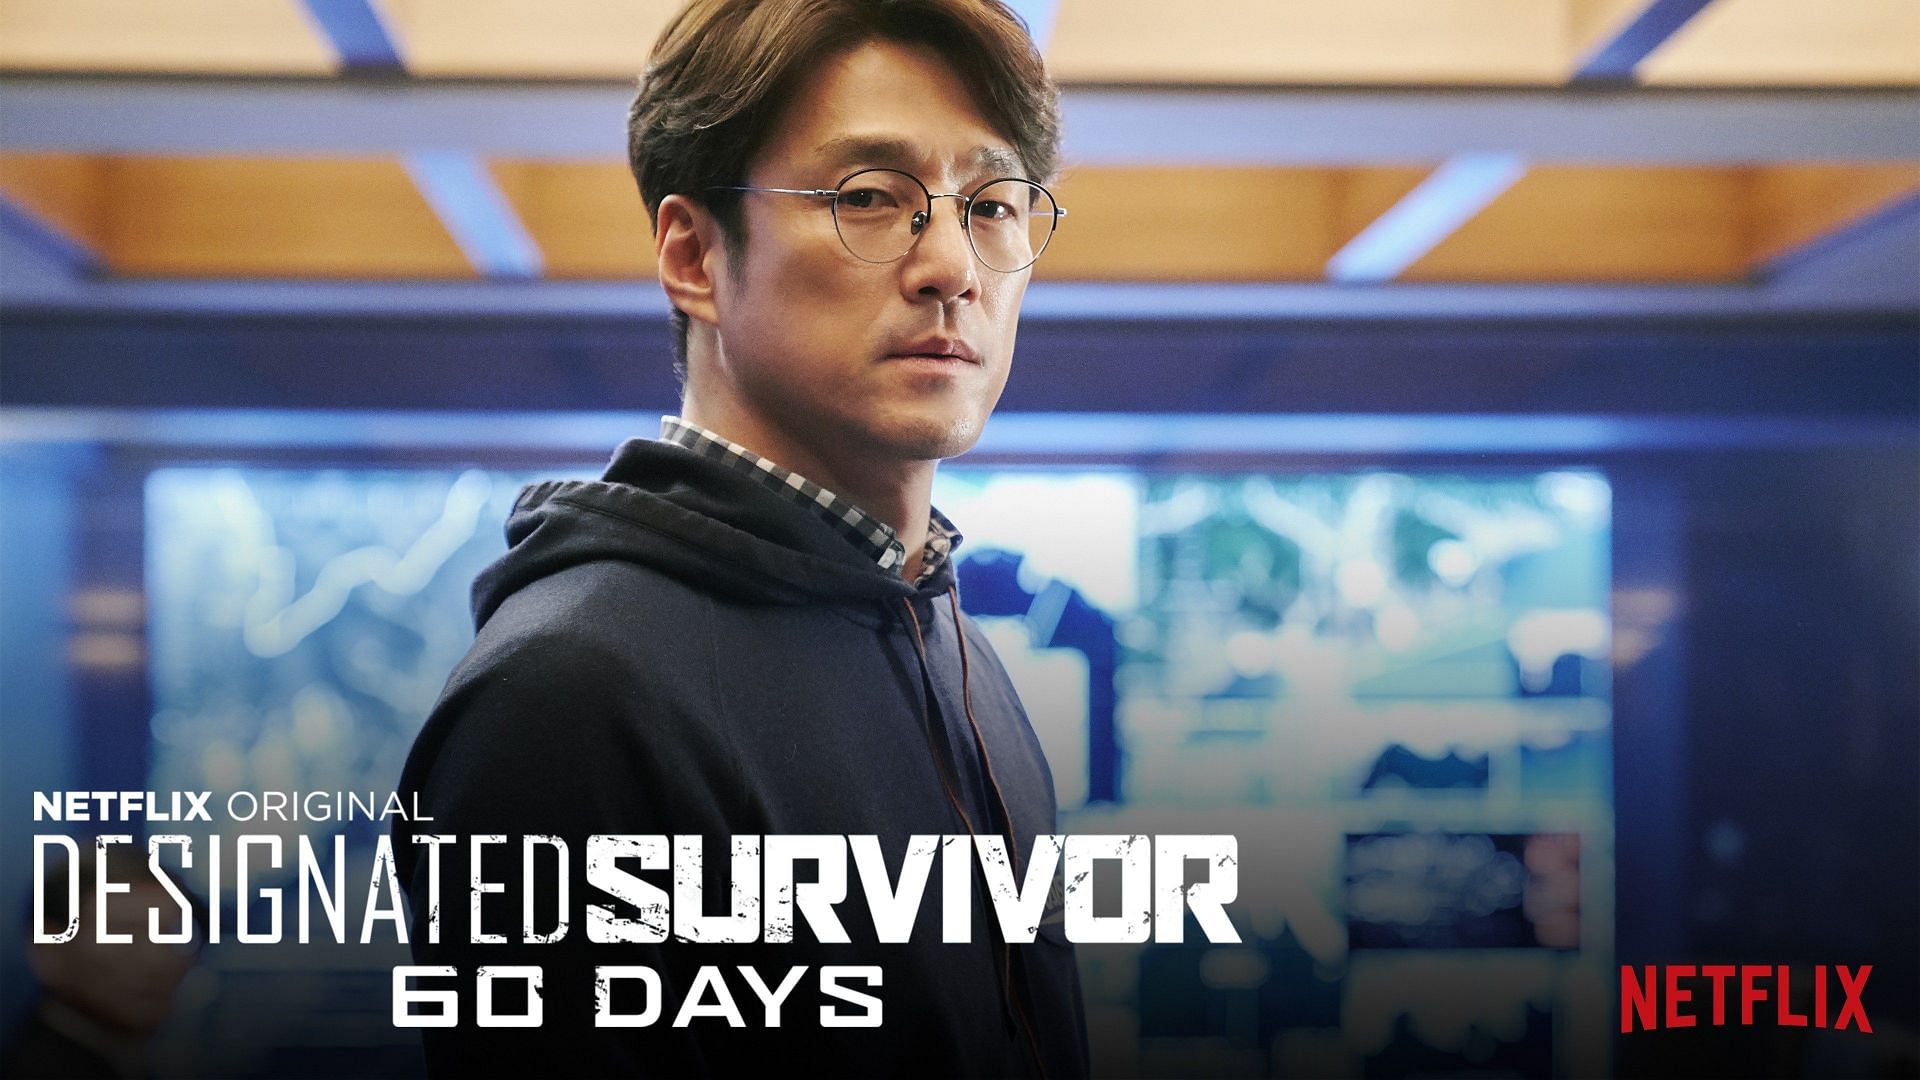 Designated Survivor: 60 Days (Image via Netflix)